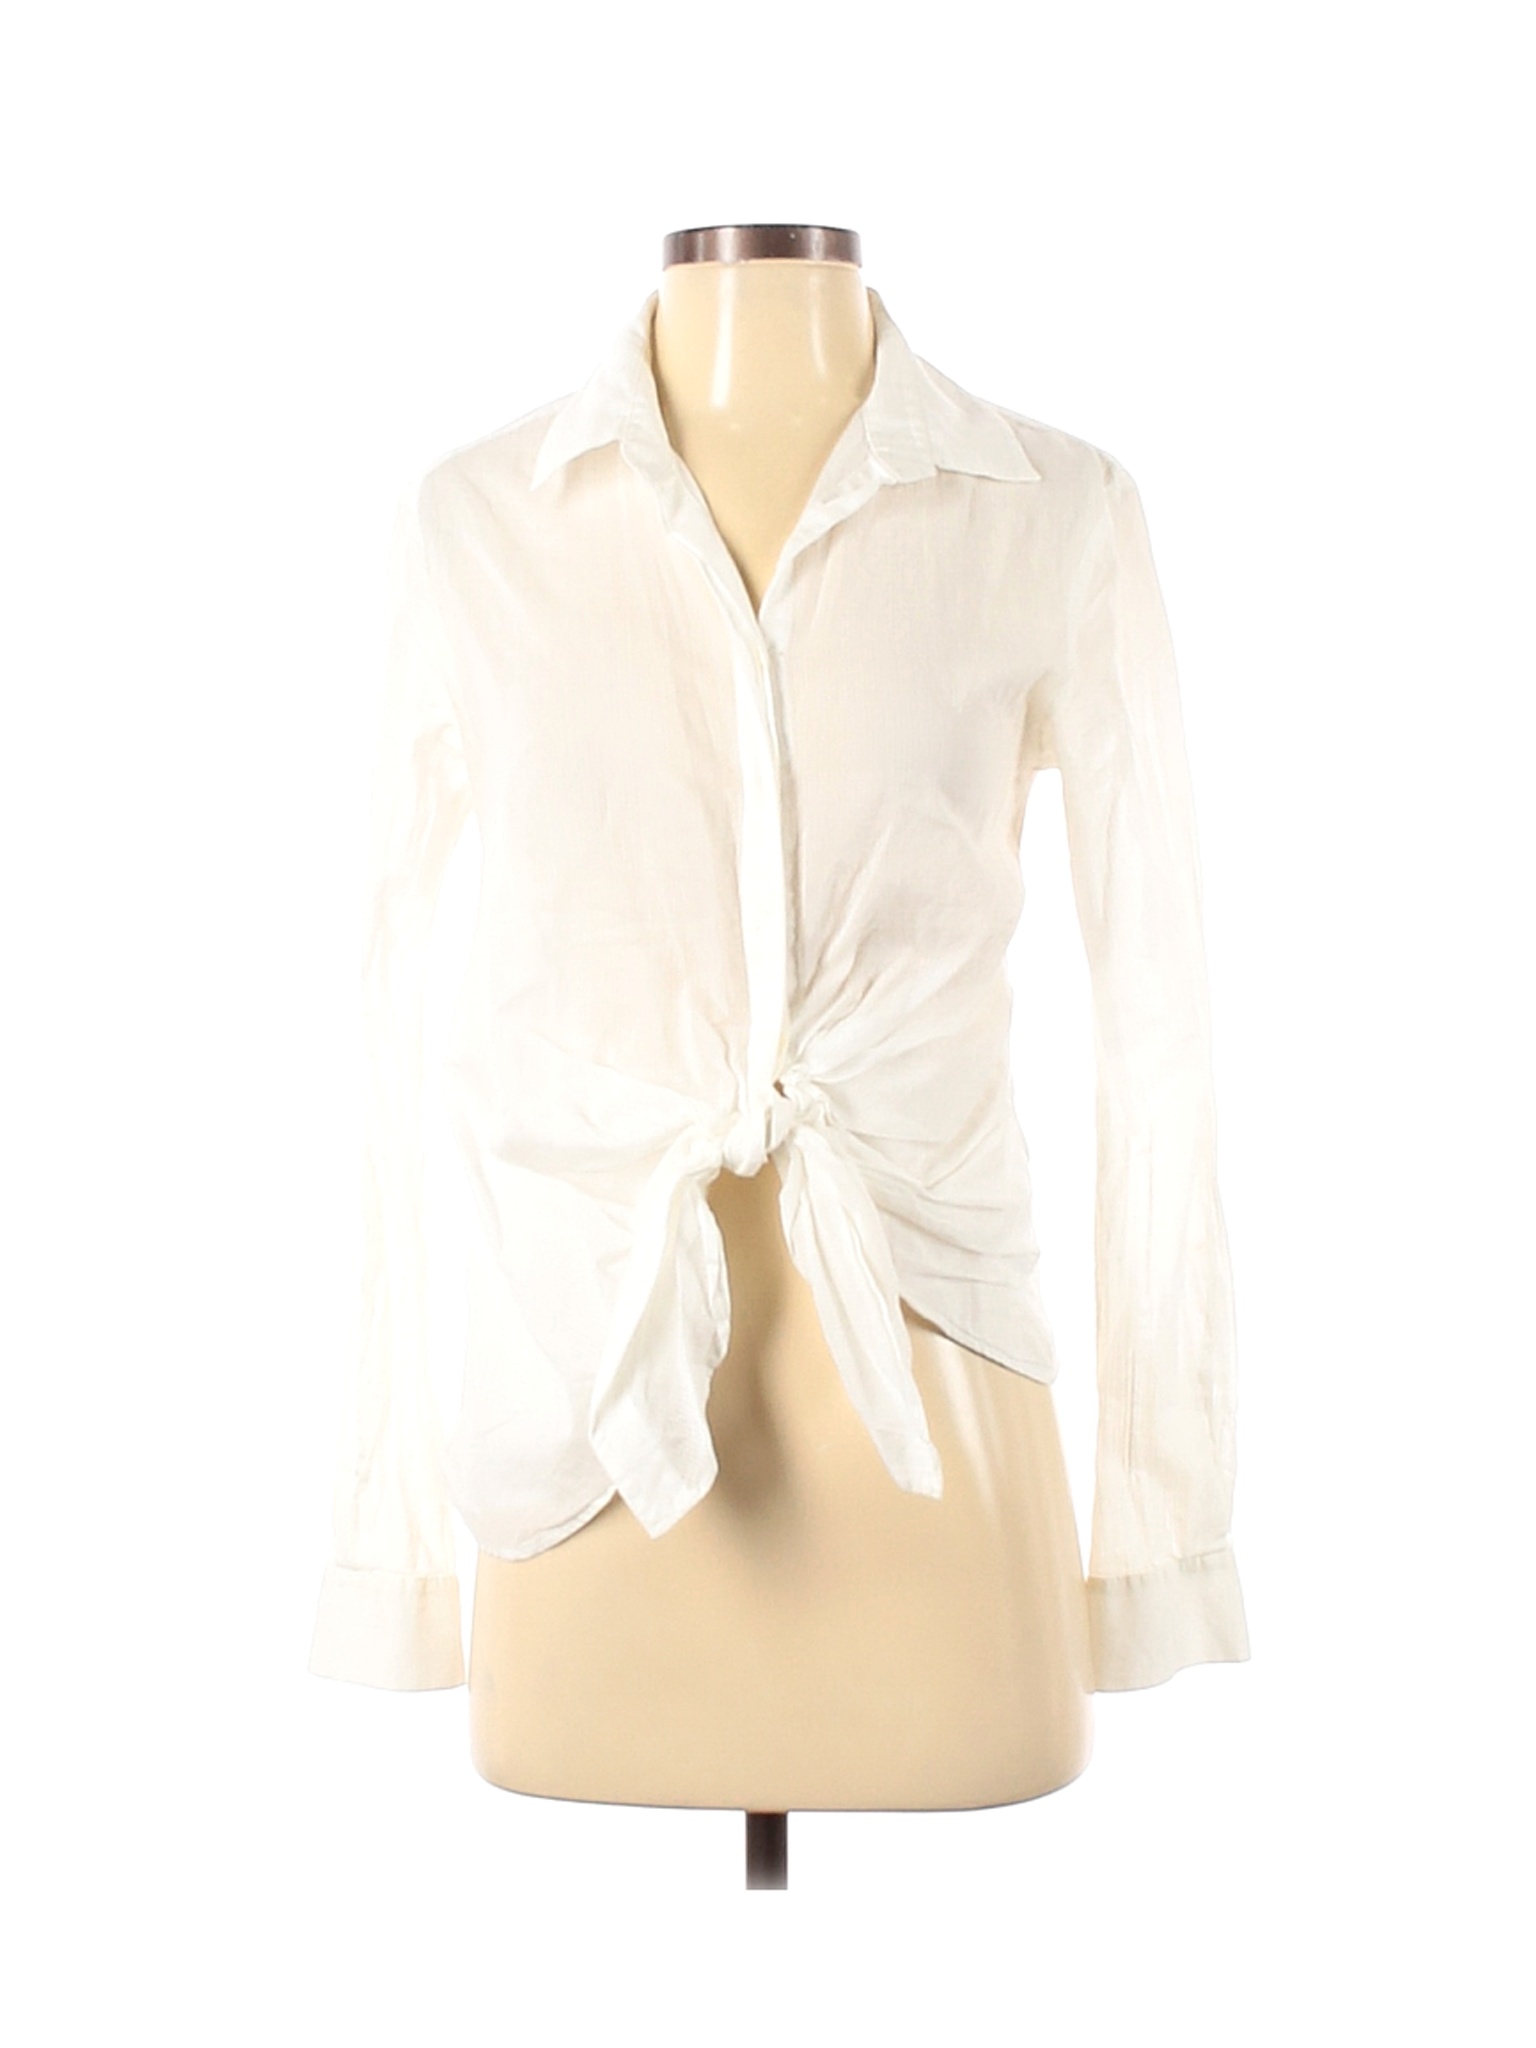 ALLSAINTS Women Ivory Long Sleeve Blouse S | eBay